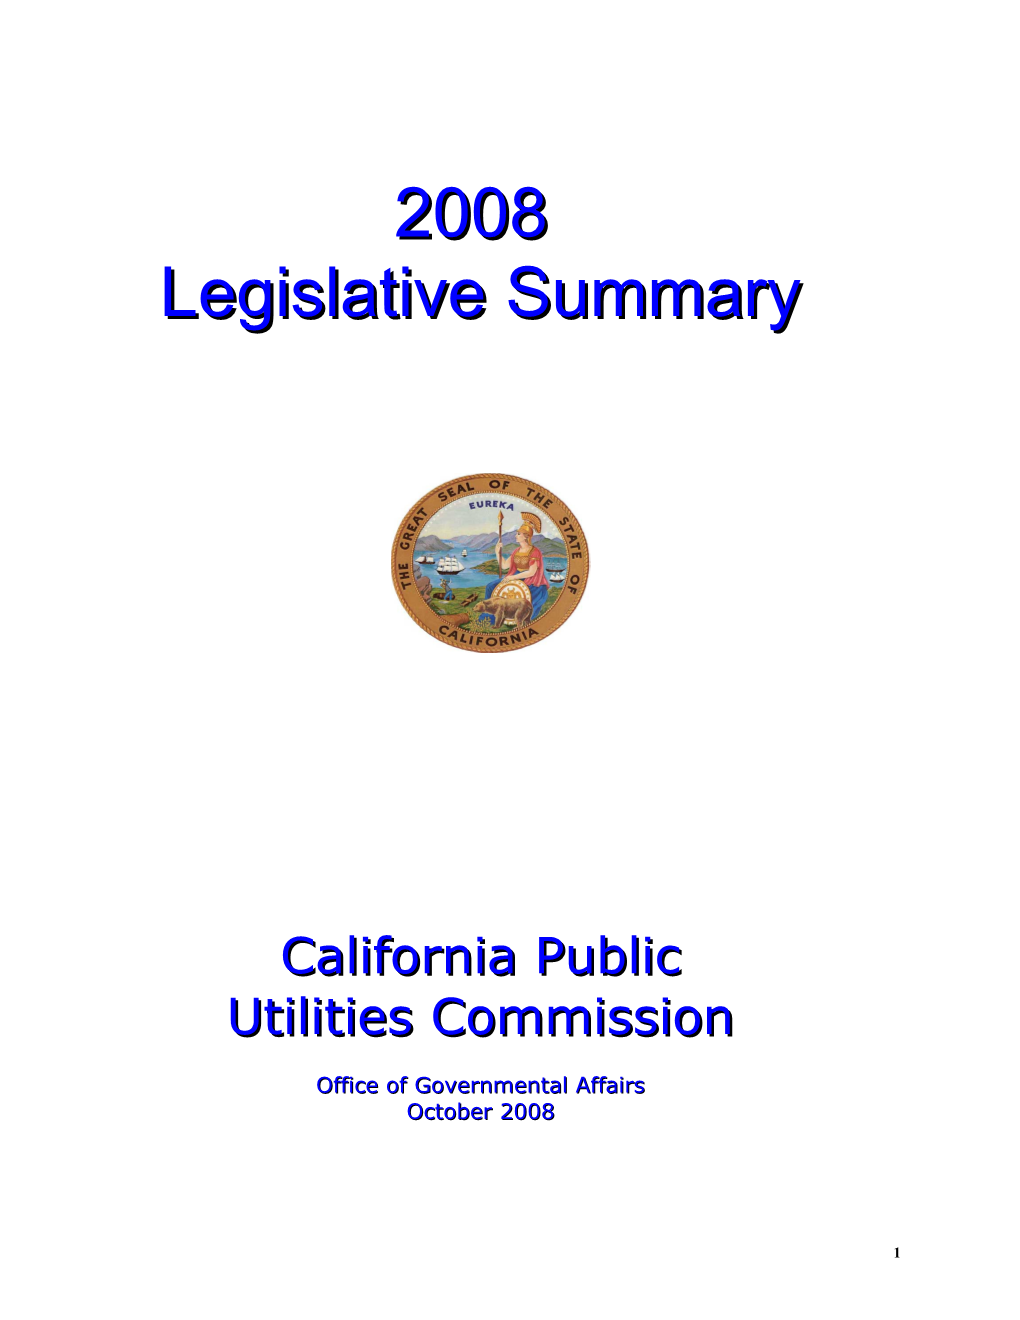 Summary of 2007 Legislation